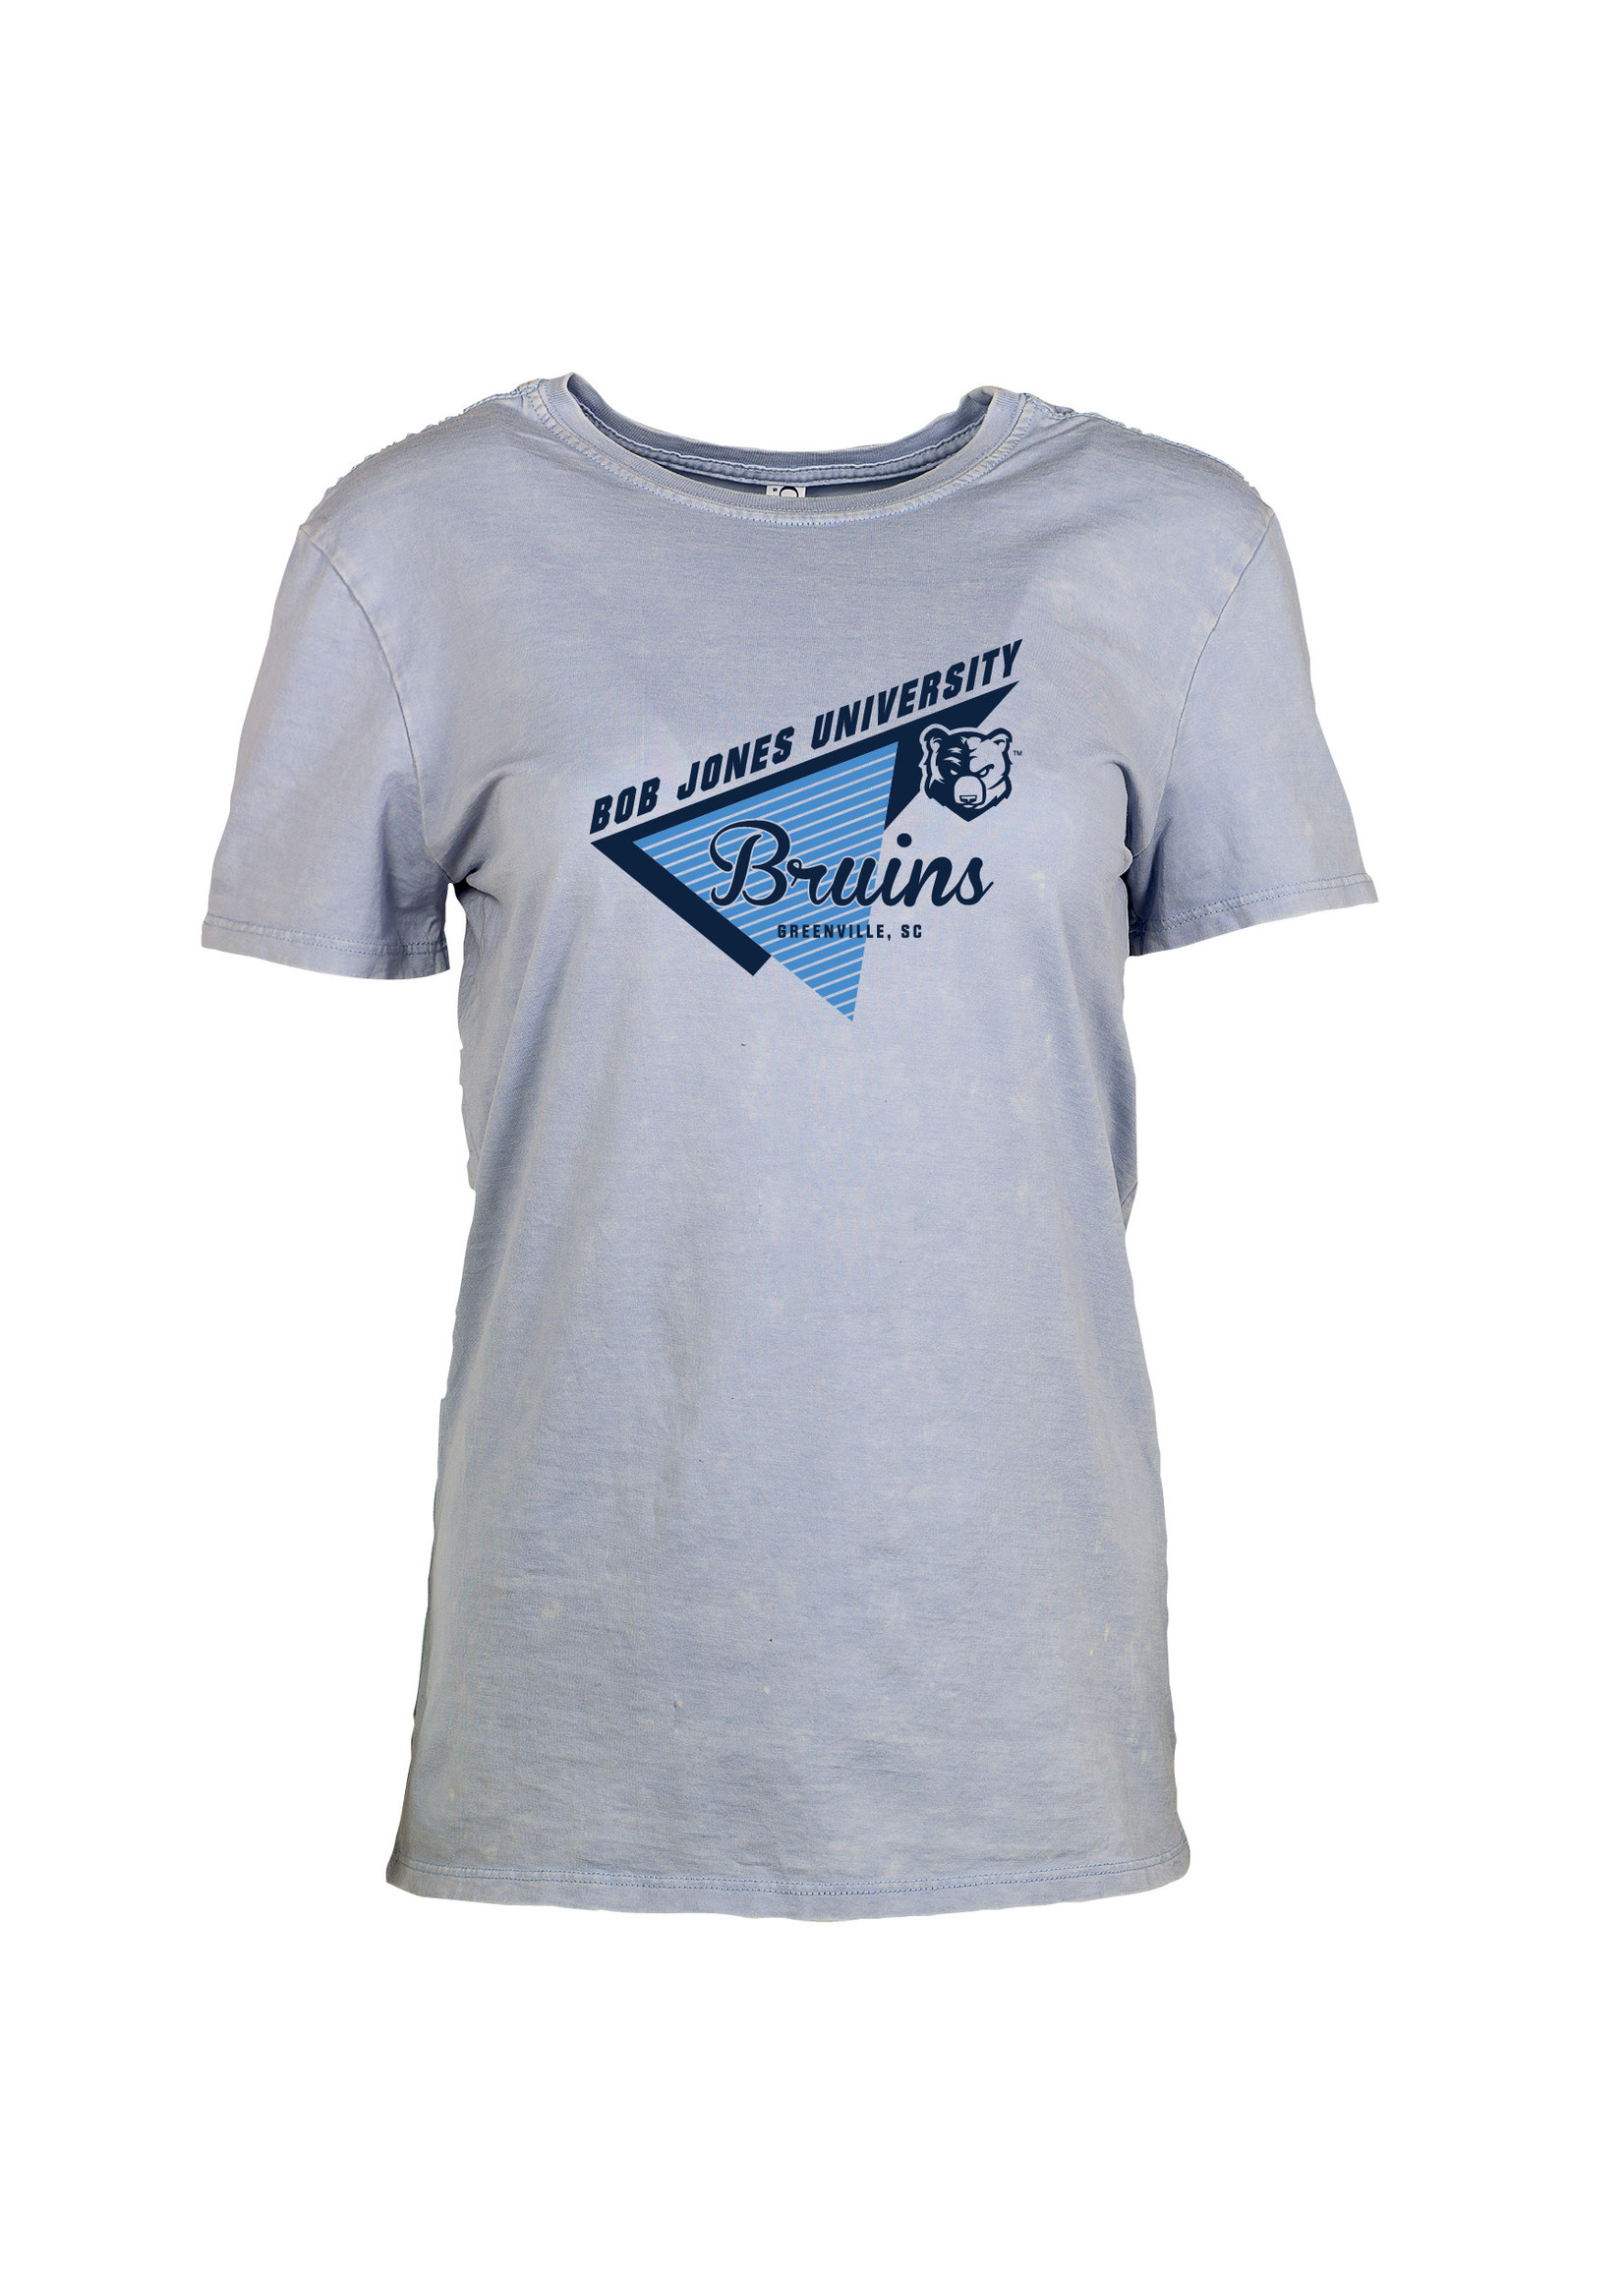 Bruins Women's Mineral Wash T-Shirt